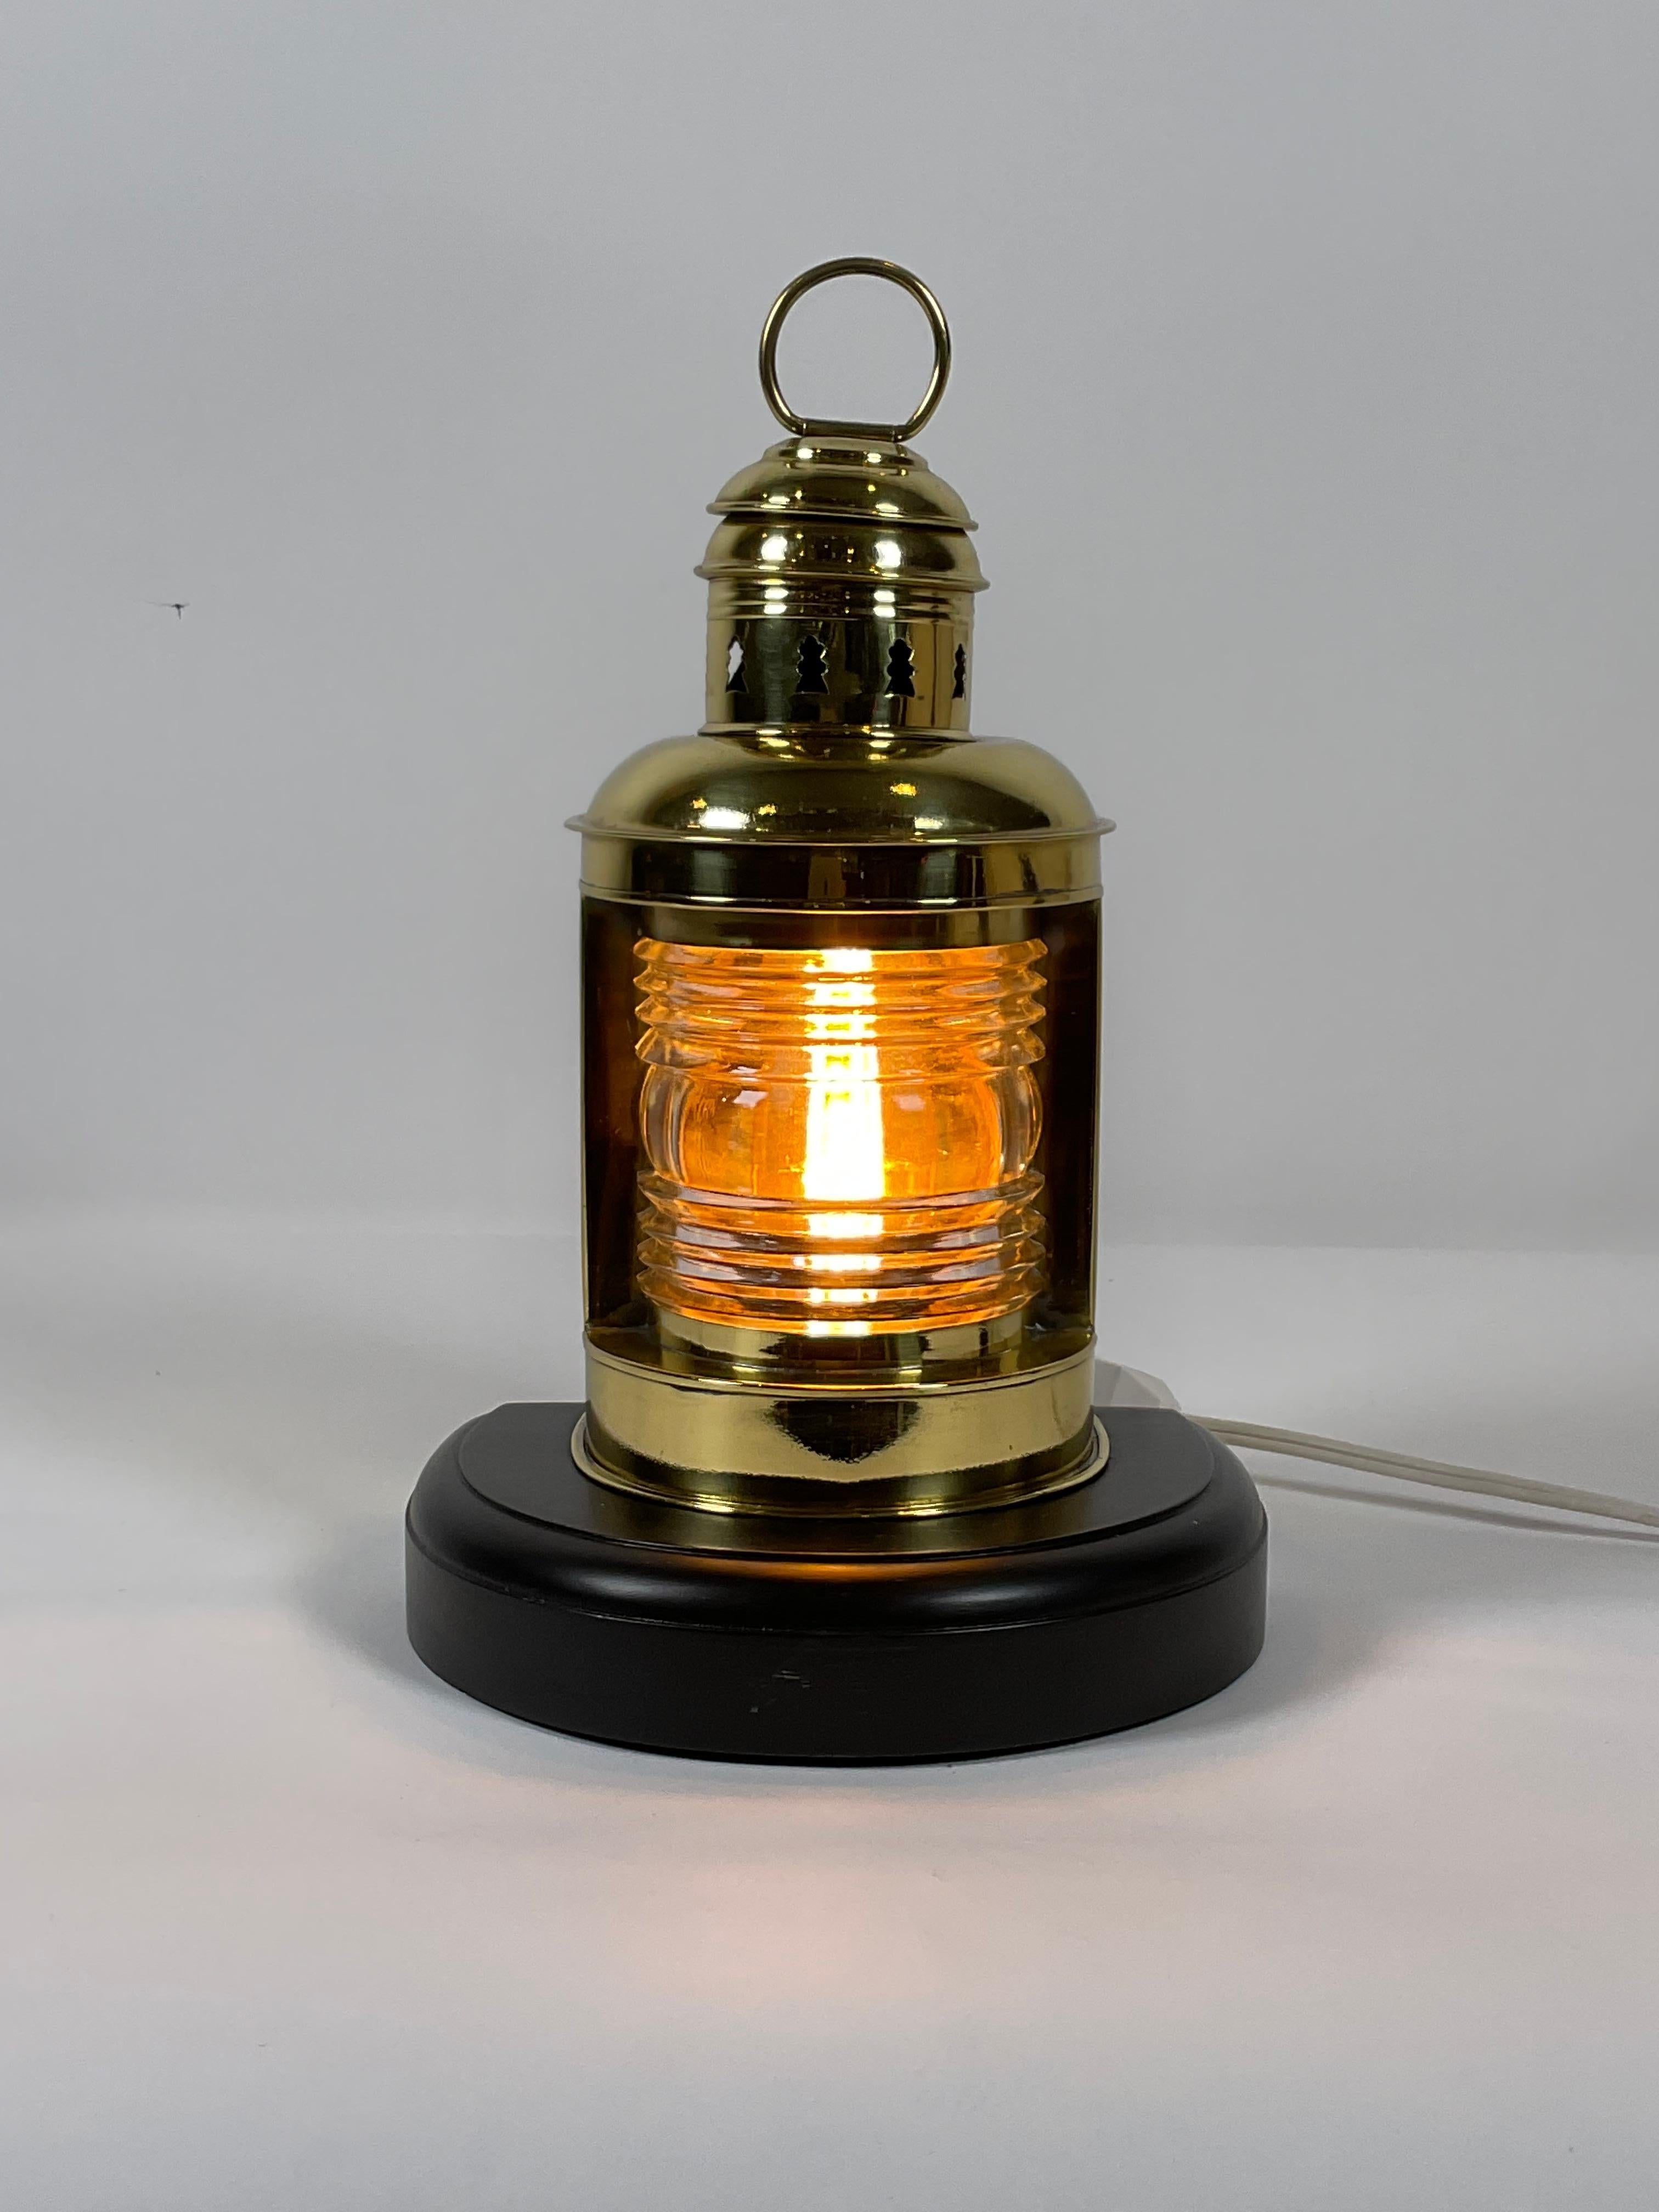 North American Brass Boat Lantern by Perko